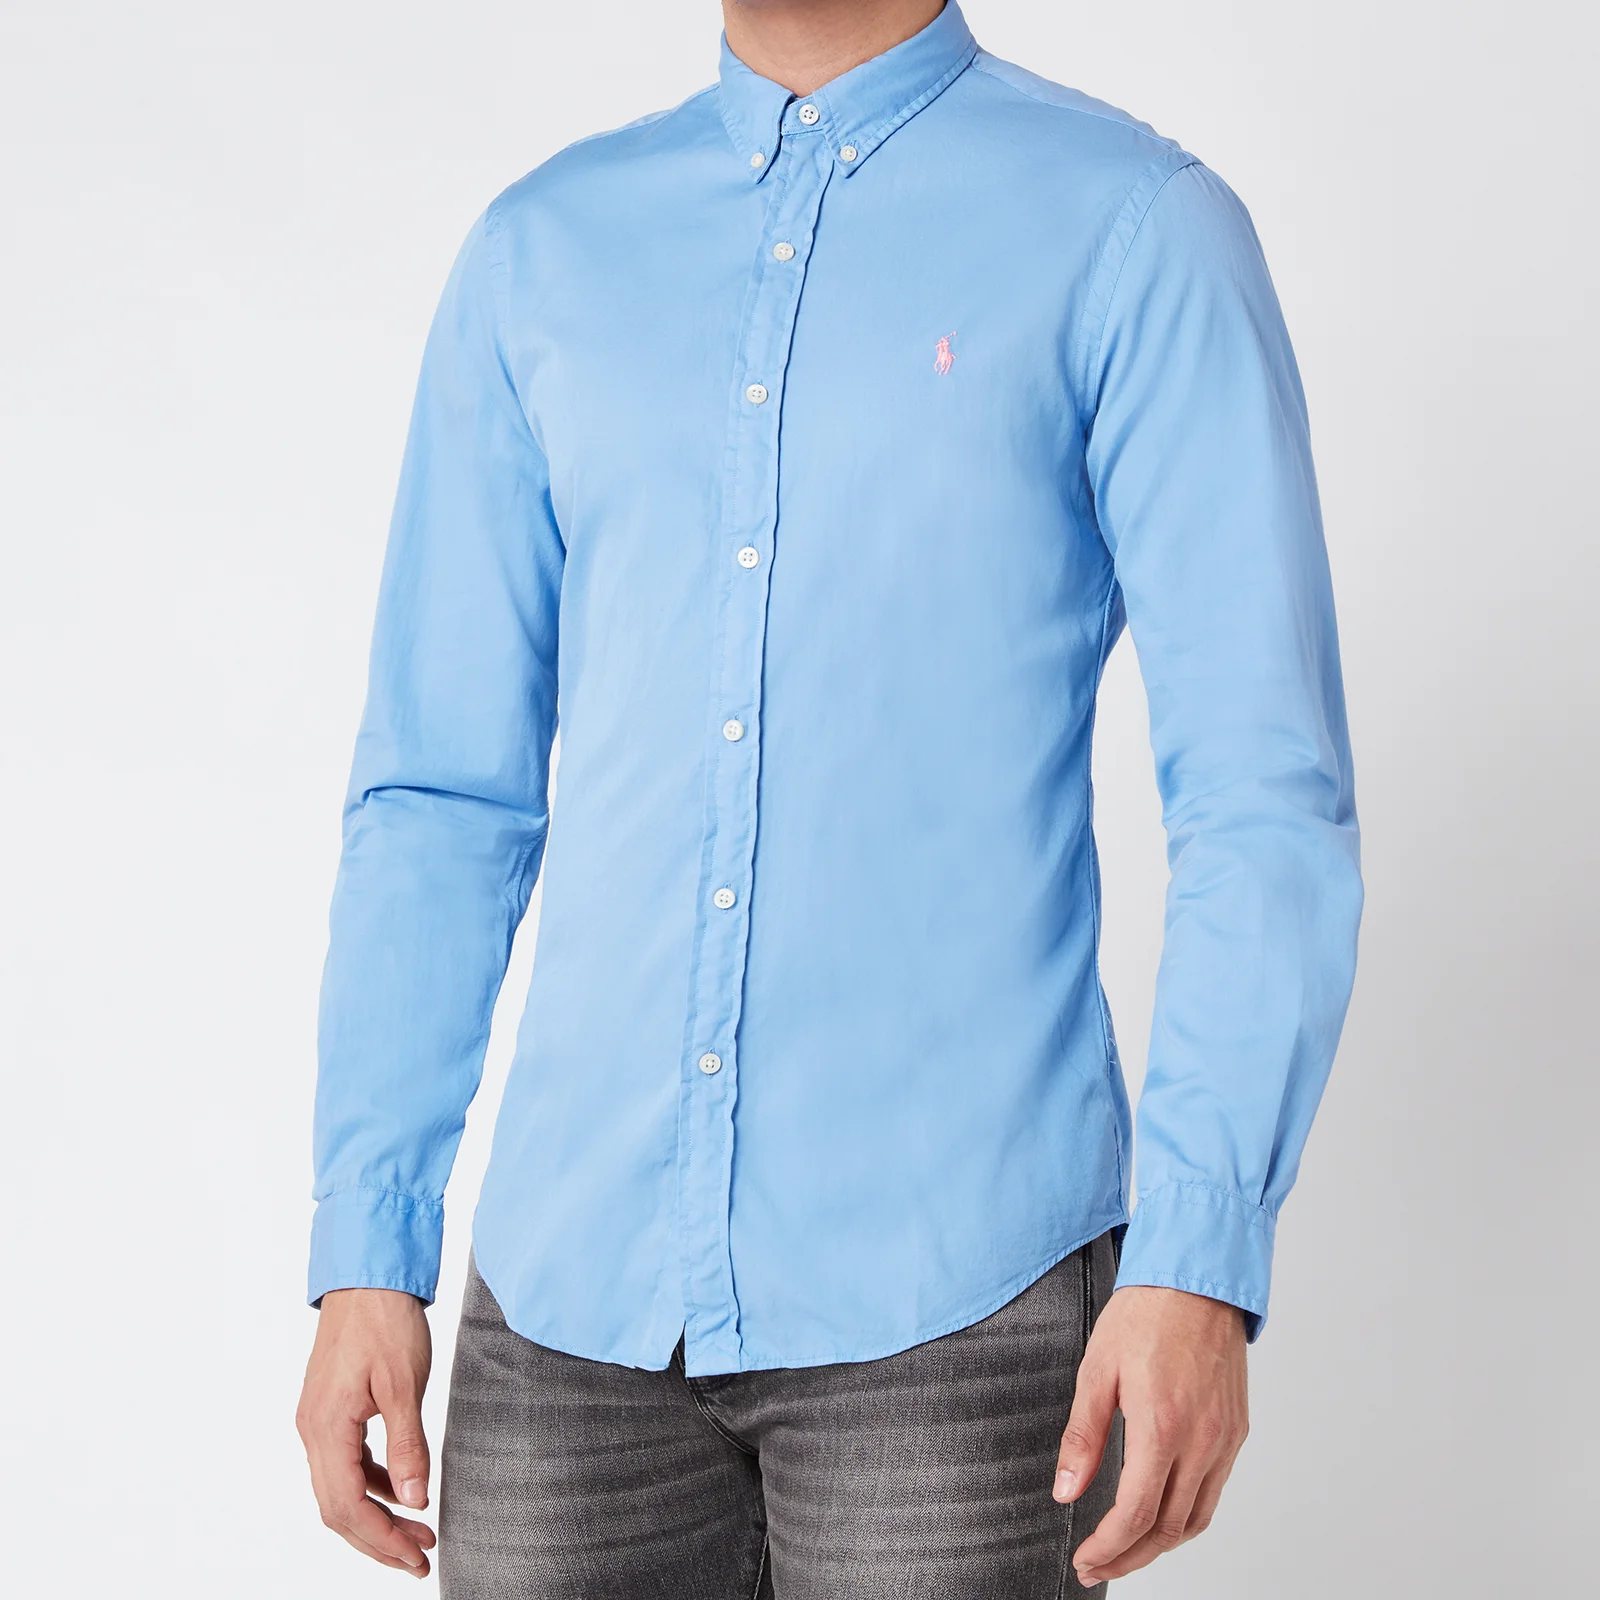 Polo Ralph Lauren Men's Slim Fit Chino Shirt - Cabana Blue Image 1